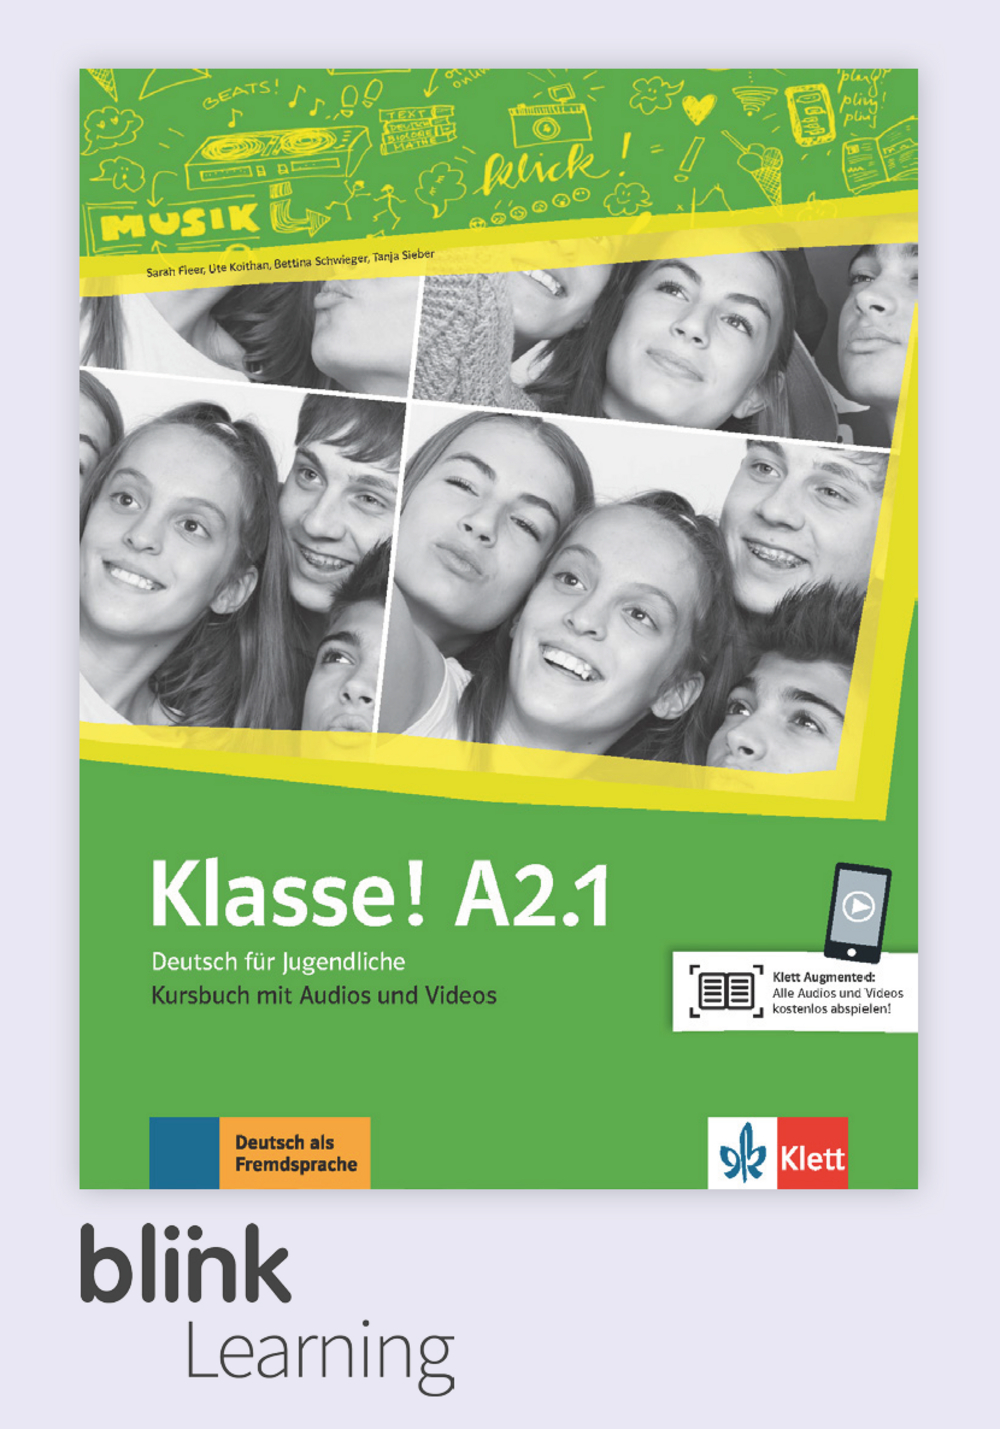 Klasse! A2.1 Digital Kursbuch fur Unterrichtende / Цифровой учебник для учителя